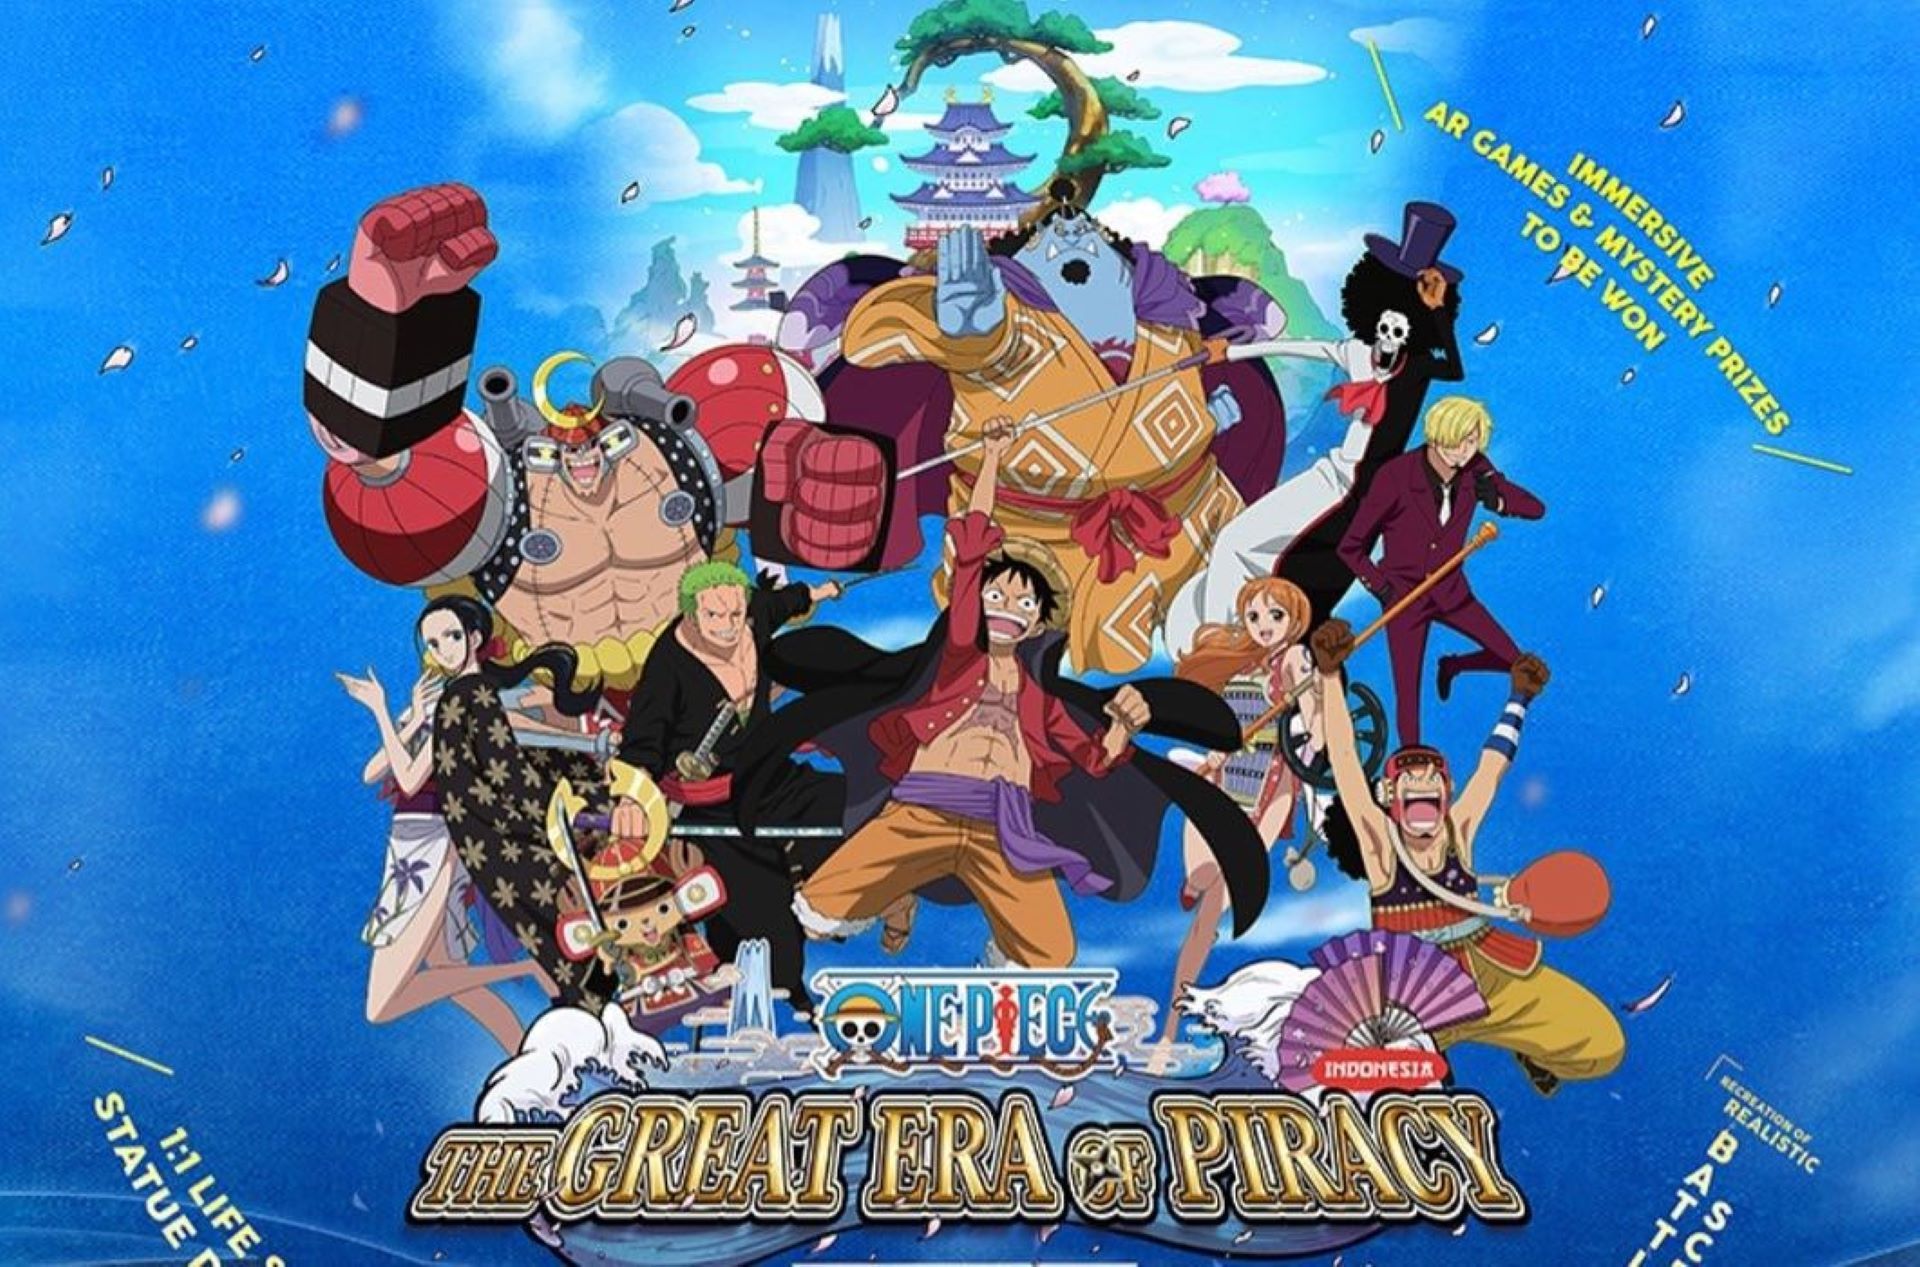 Poster event One Piece Exhibition Jakarta.